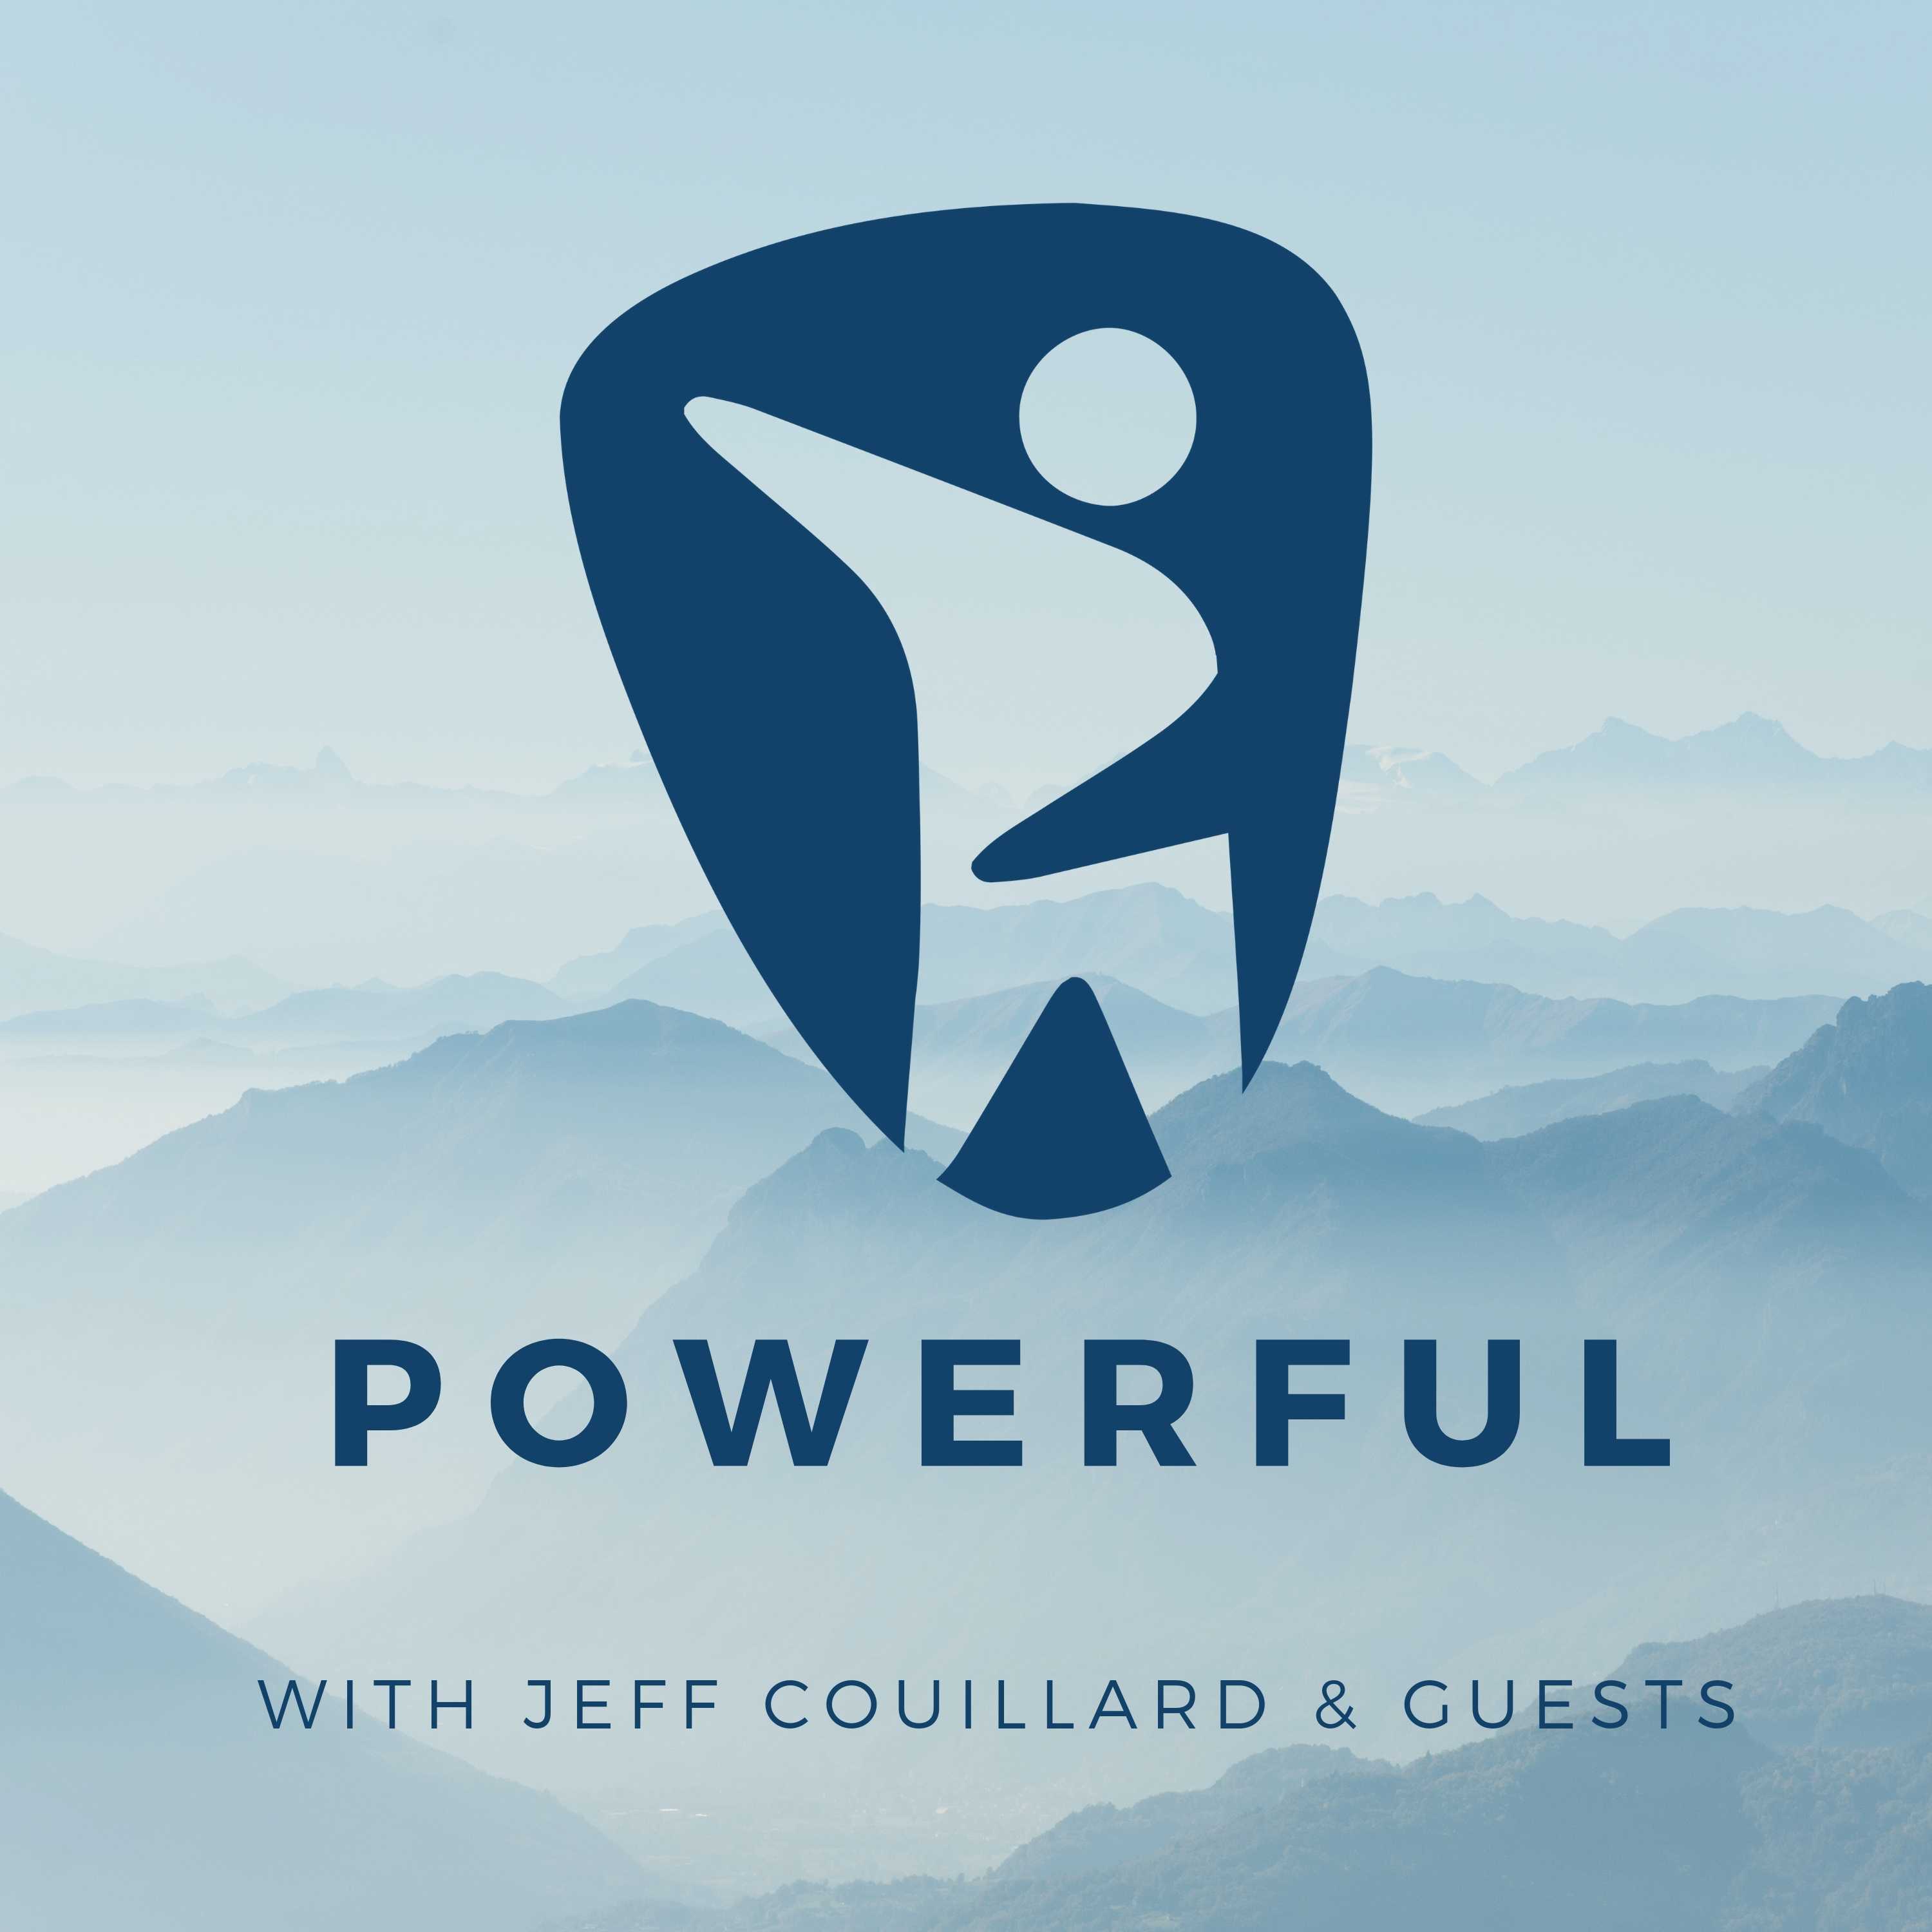 Powerful with Jeff Couillard